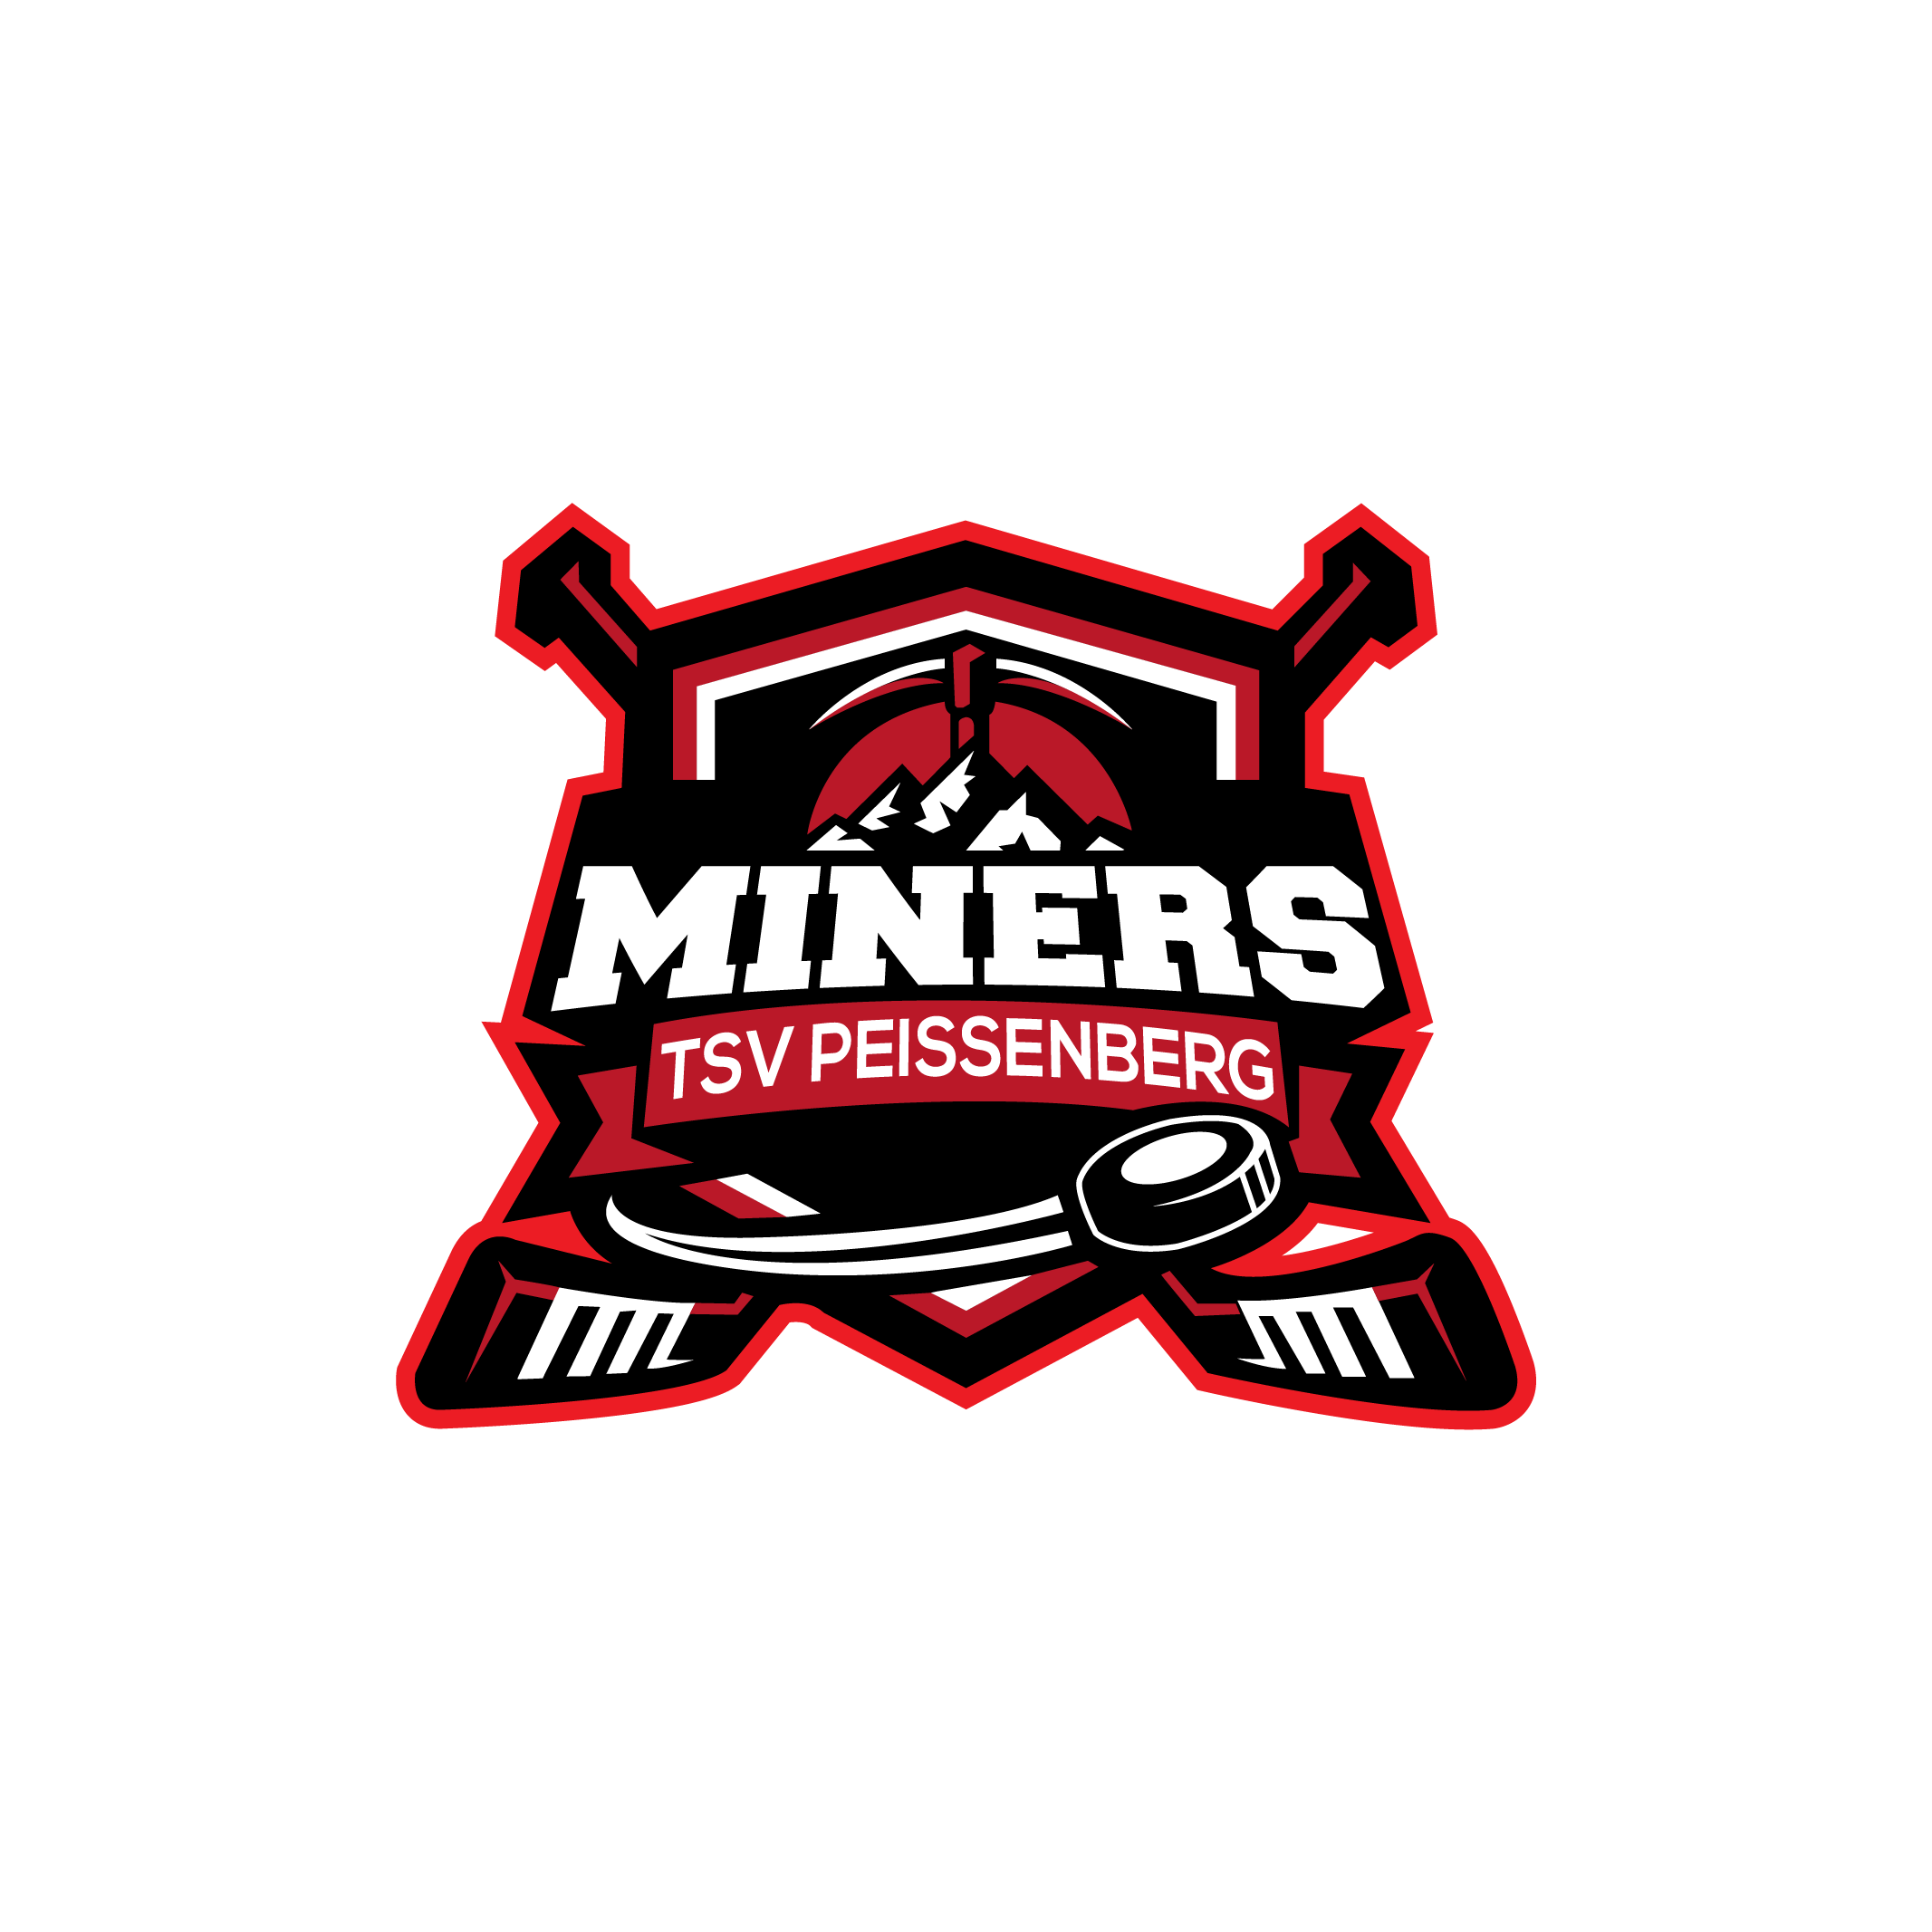 TSV Peißenberg Miners Logo